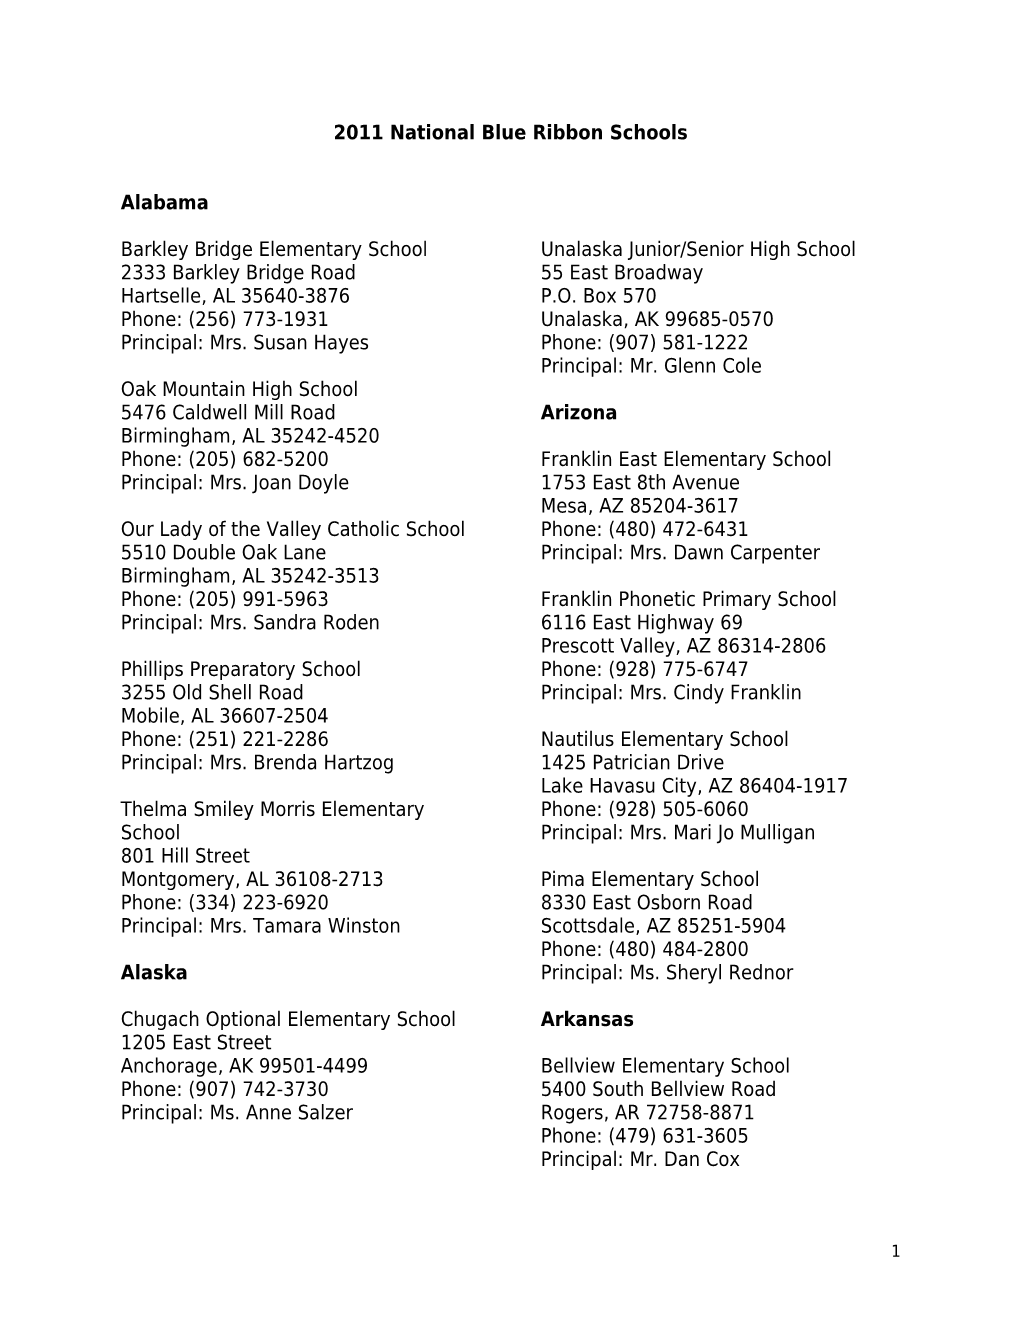 2011 Blue Ribbon Schools, Public and Private November 2011 (Msword)